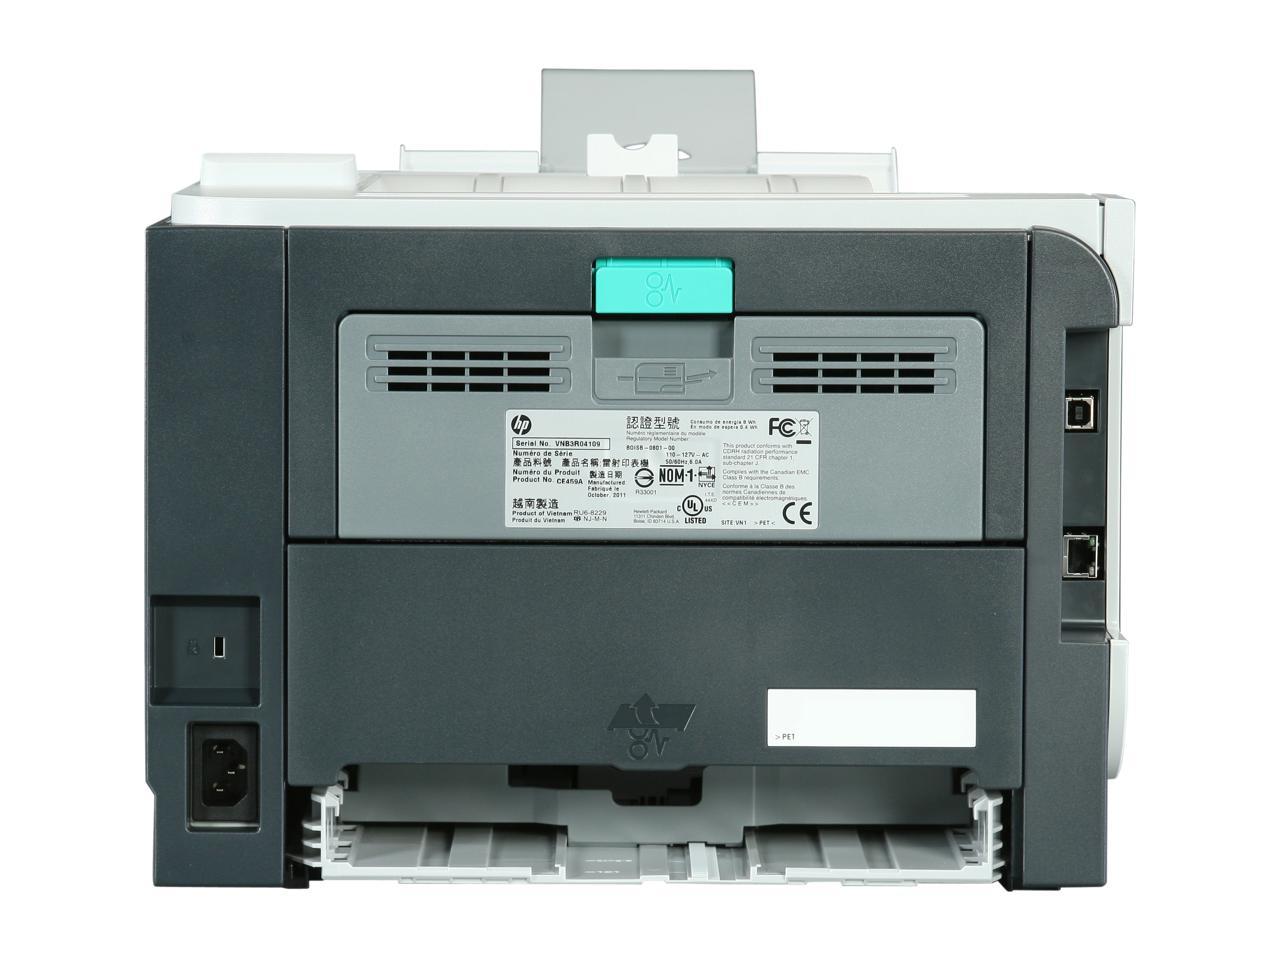 hp laserjet p2055dn printer driver download